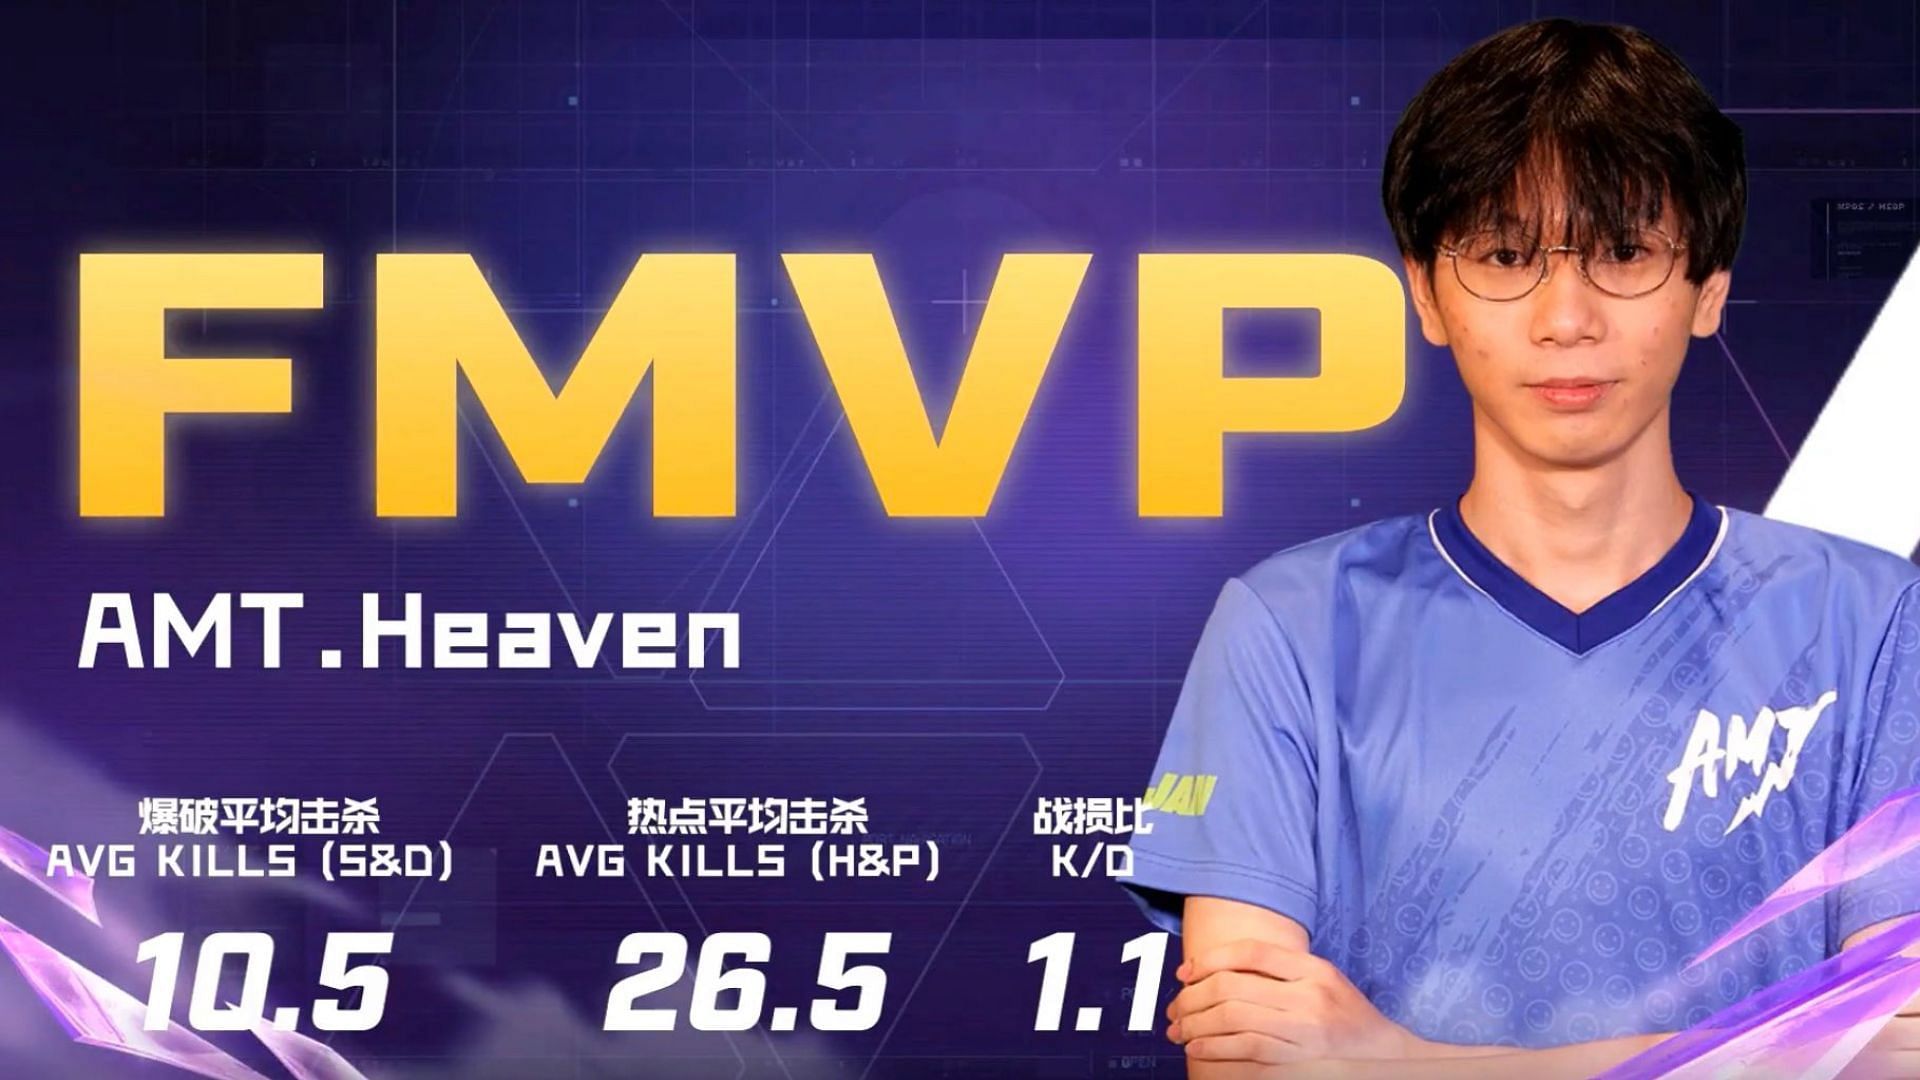 With a K/D ratio of 1.1, Heaven wins the MVP award (Image via Garena)